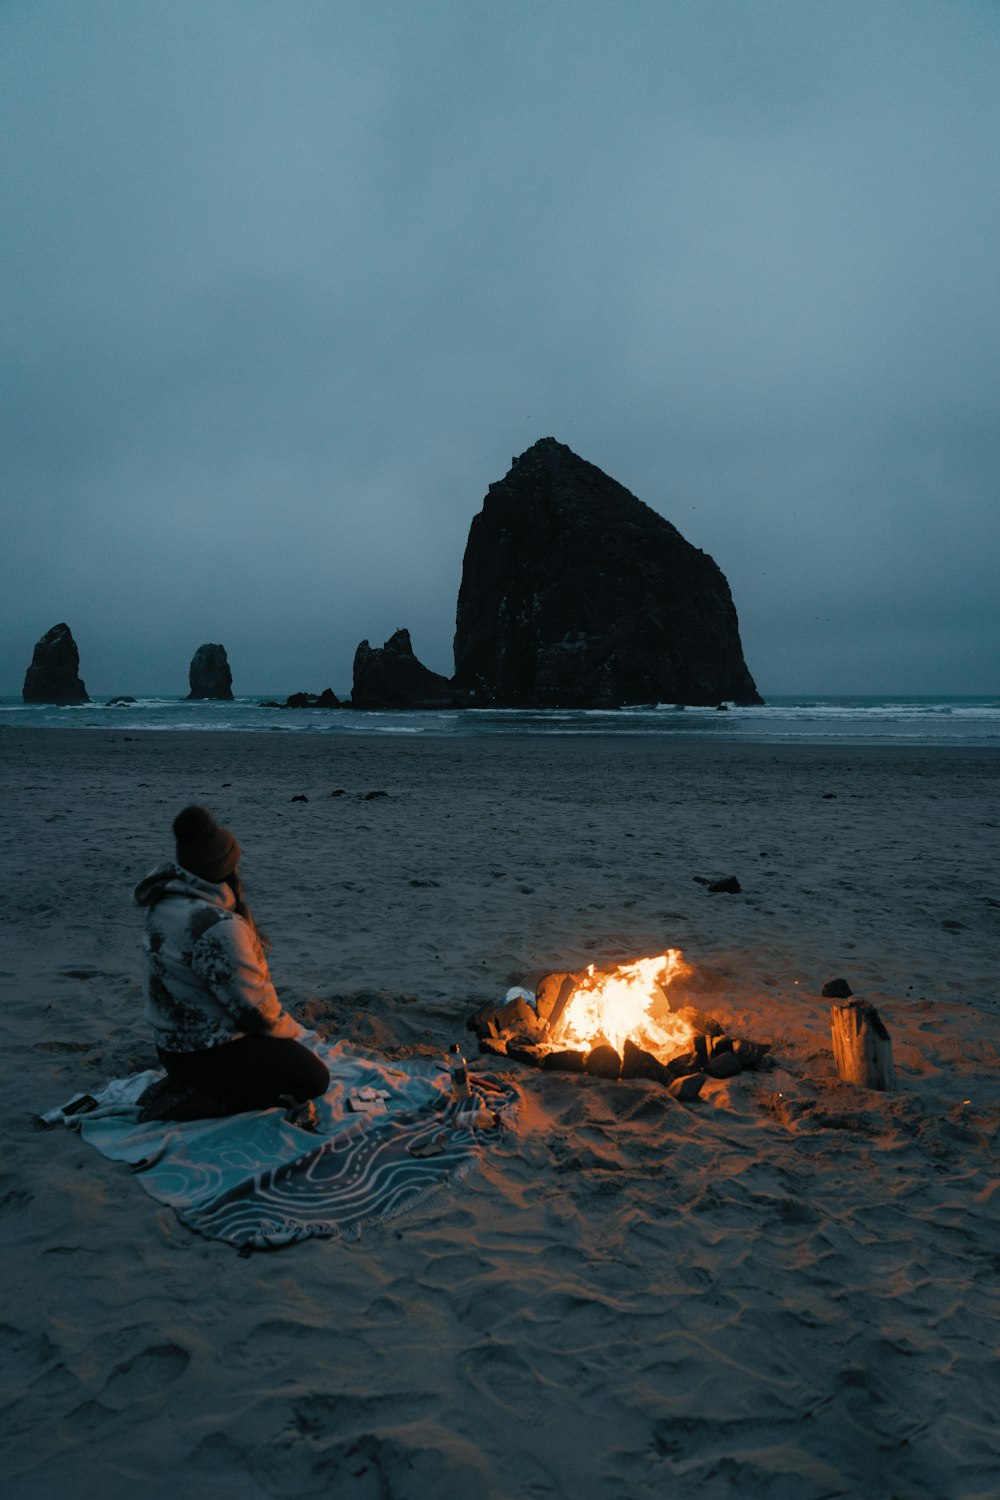 Una persona sentada junto a una fogata en una playa